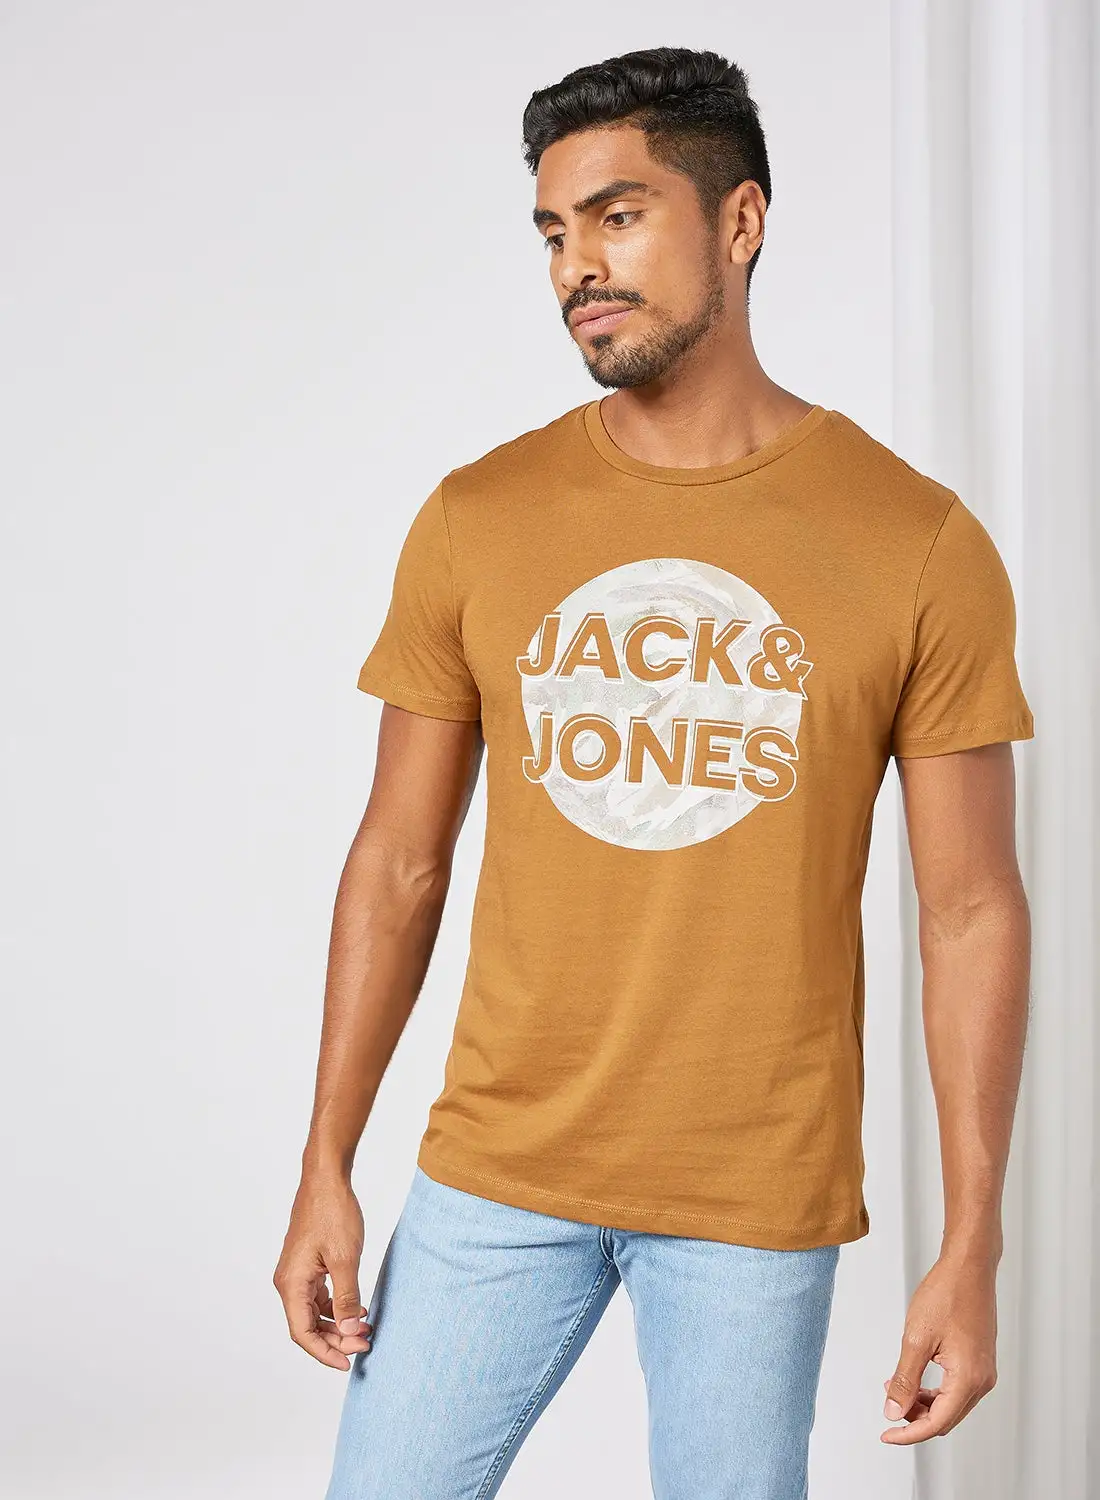 JACK & JONES Signature T-Shirt Brown